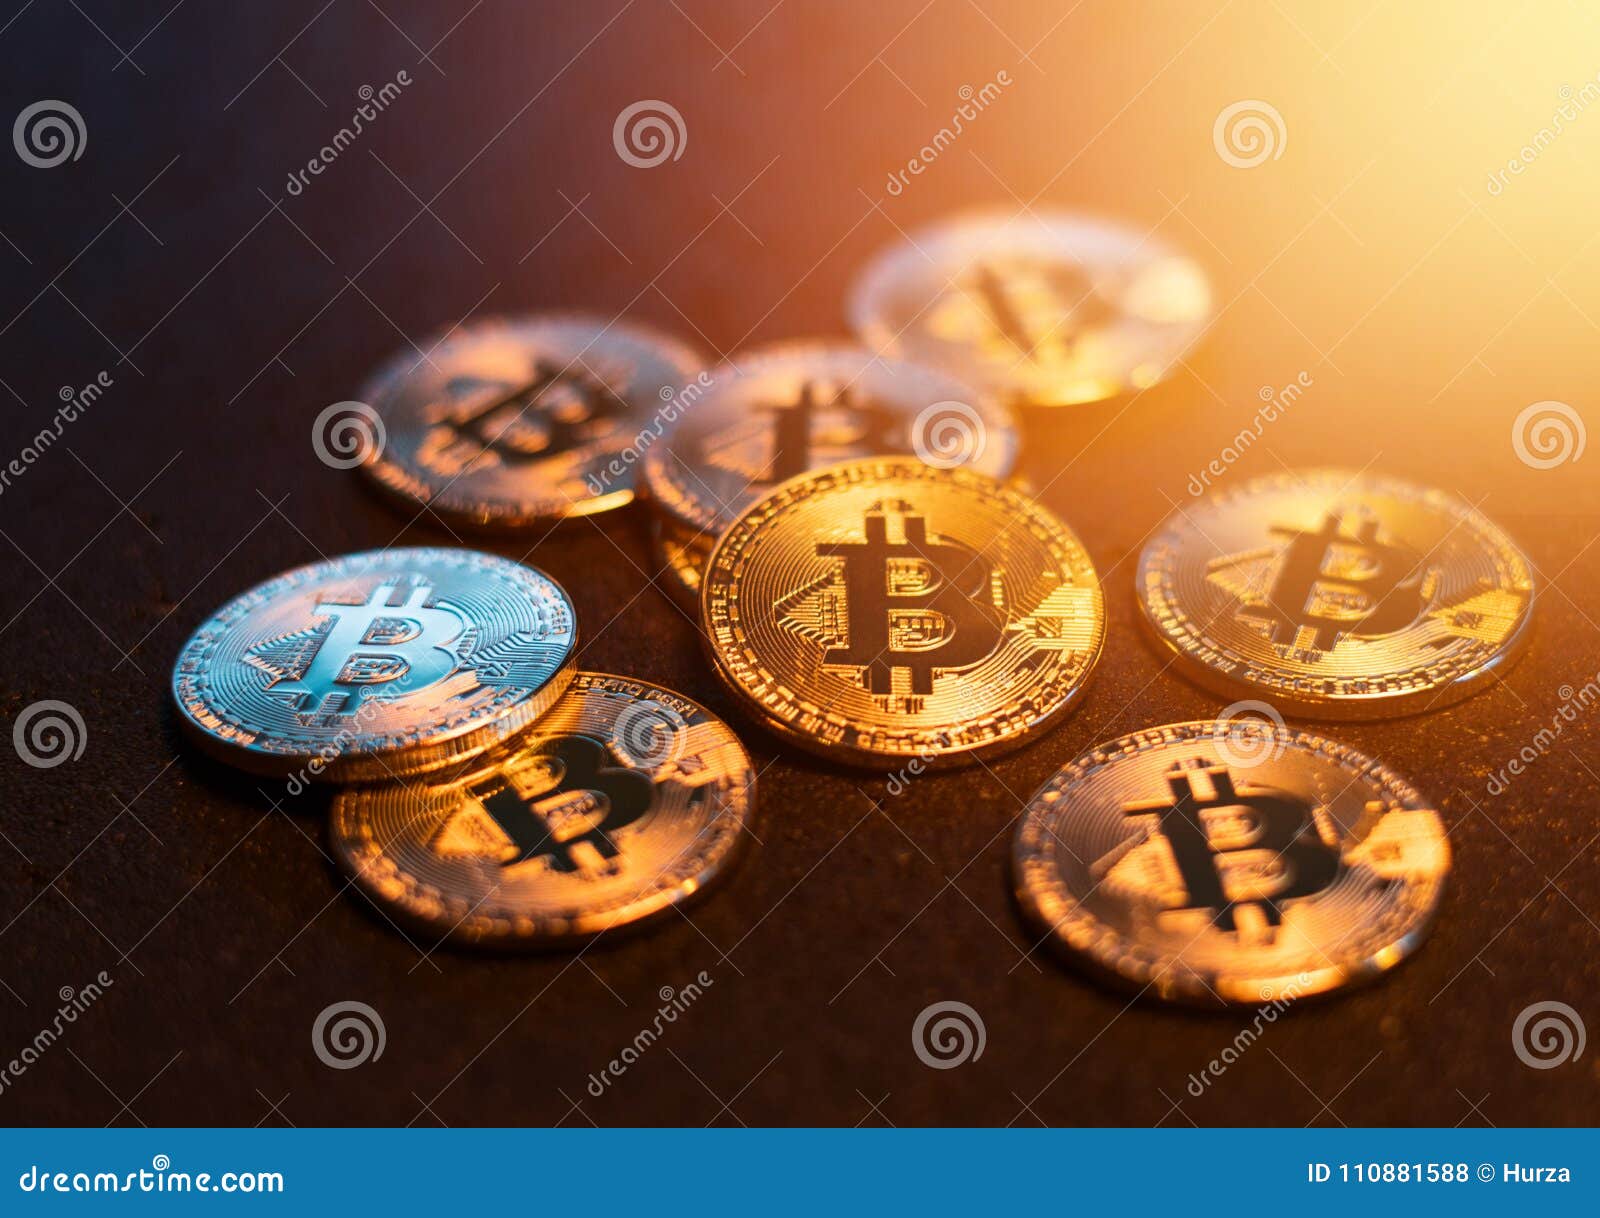 Bitcoin BTC XBT Digital Crypto Currency Stock Photo ...